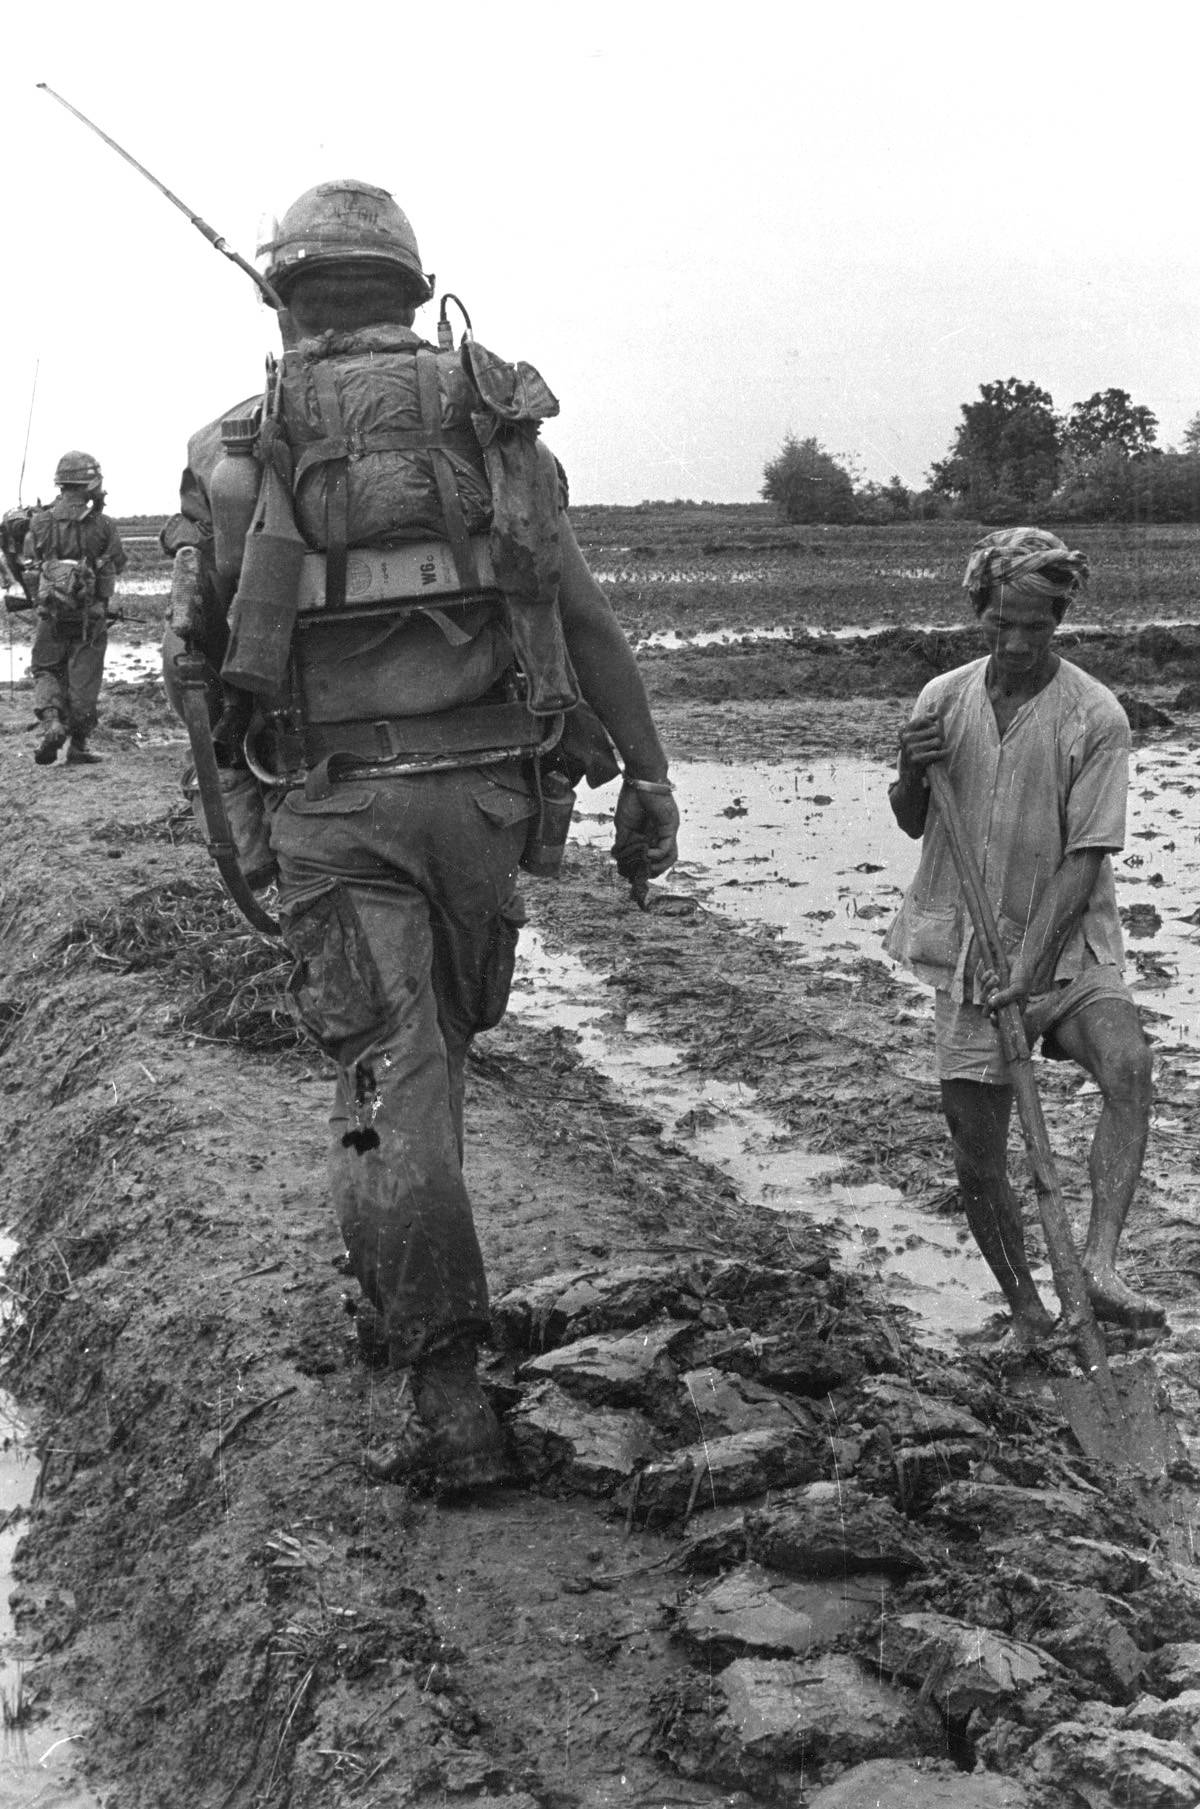 A legacy of the Vietnam War